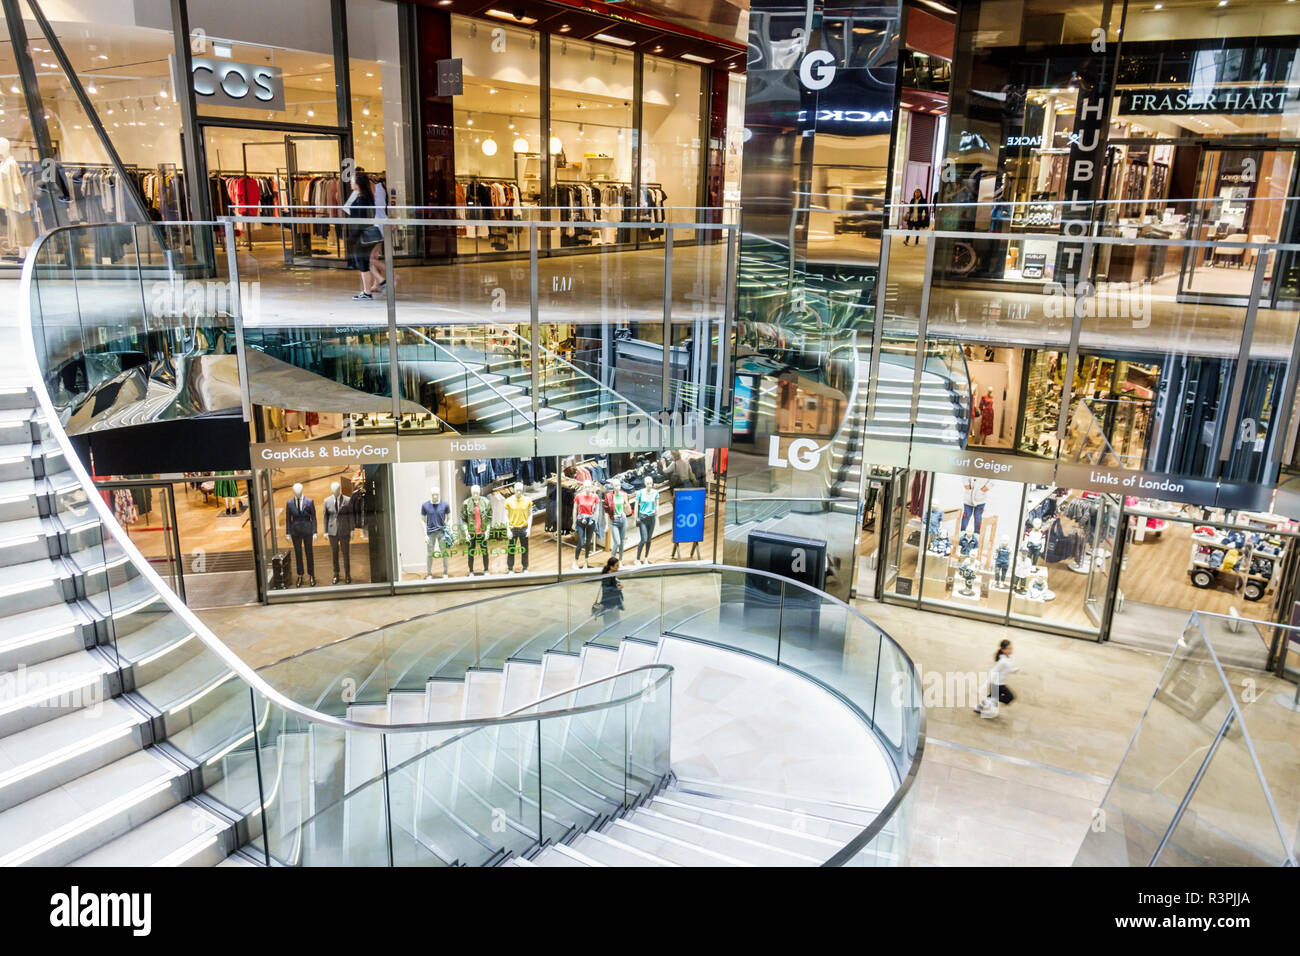 Ville de Londres Angleterre,UK One New change Mall,centre,atrium,escaliers,balustrade en verre,magasins,COS,Baby GAP,Fraser Hart,UK GB Anglais Europe,UK1808270 Banque D'Images